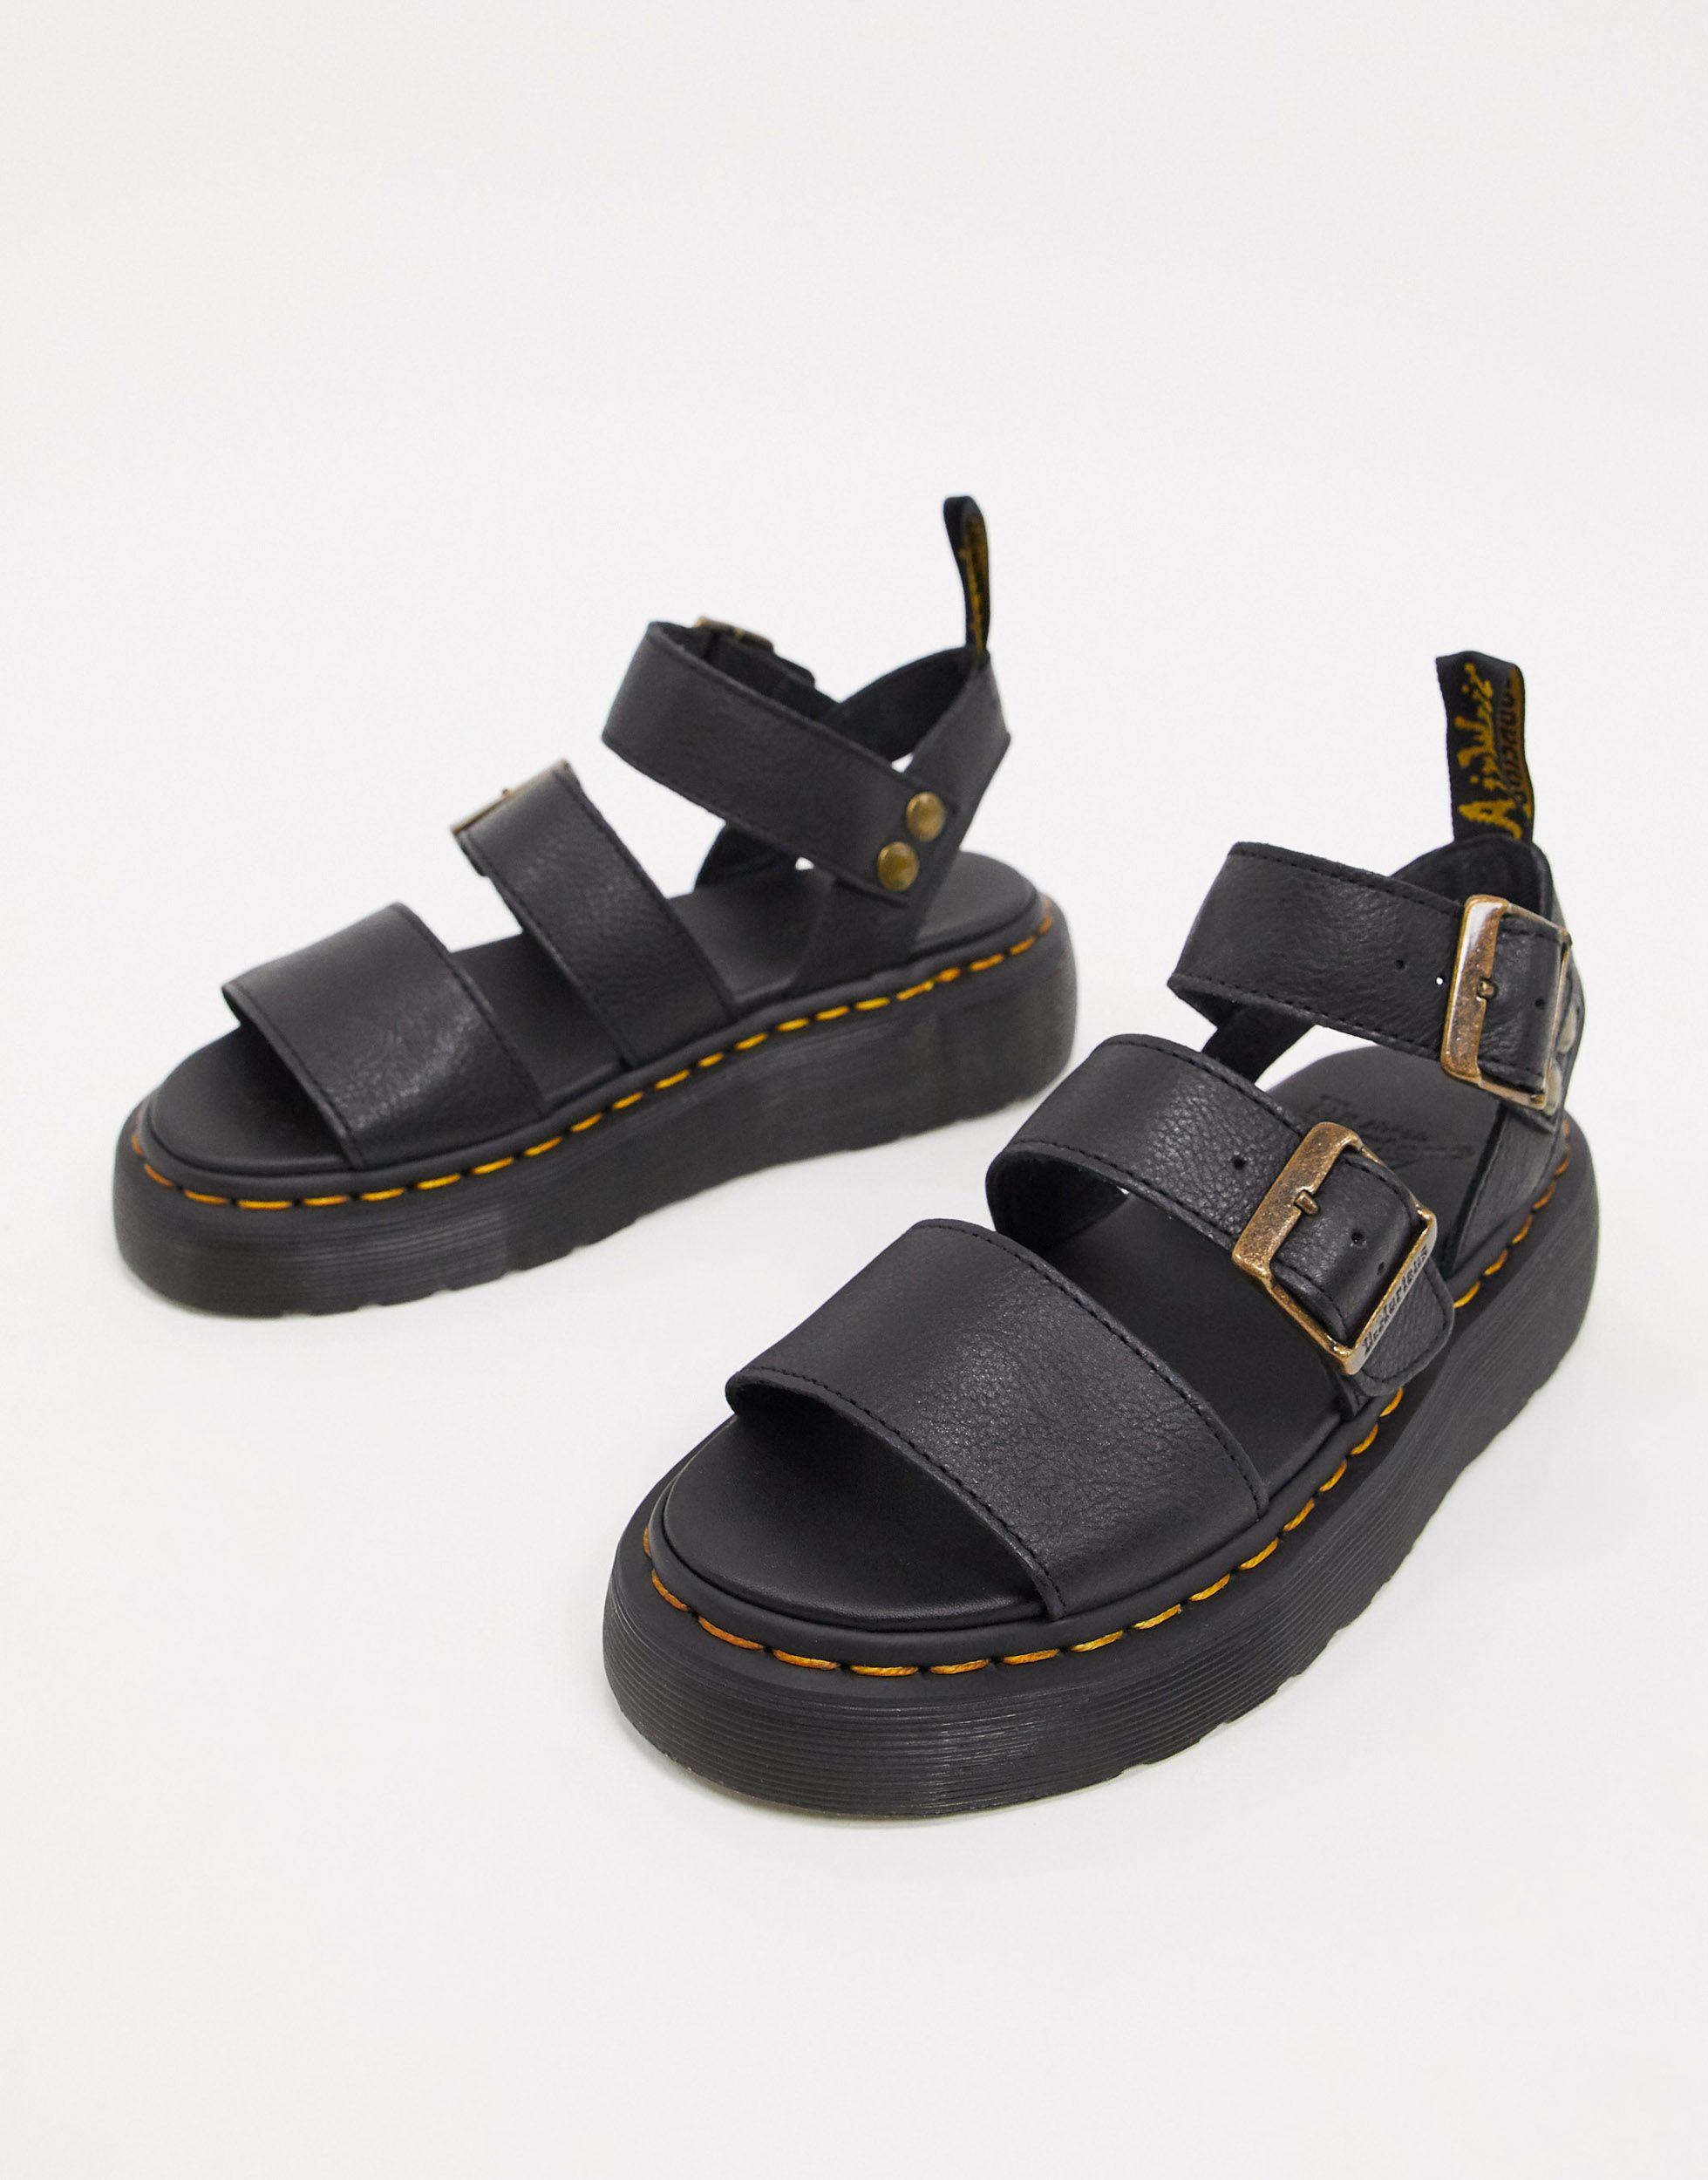 Buy > dr marten gryphon quad sandals > in stock